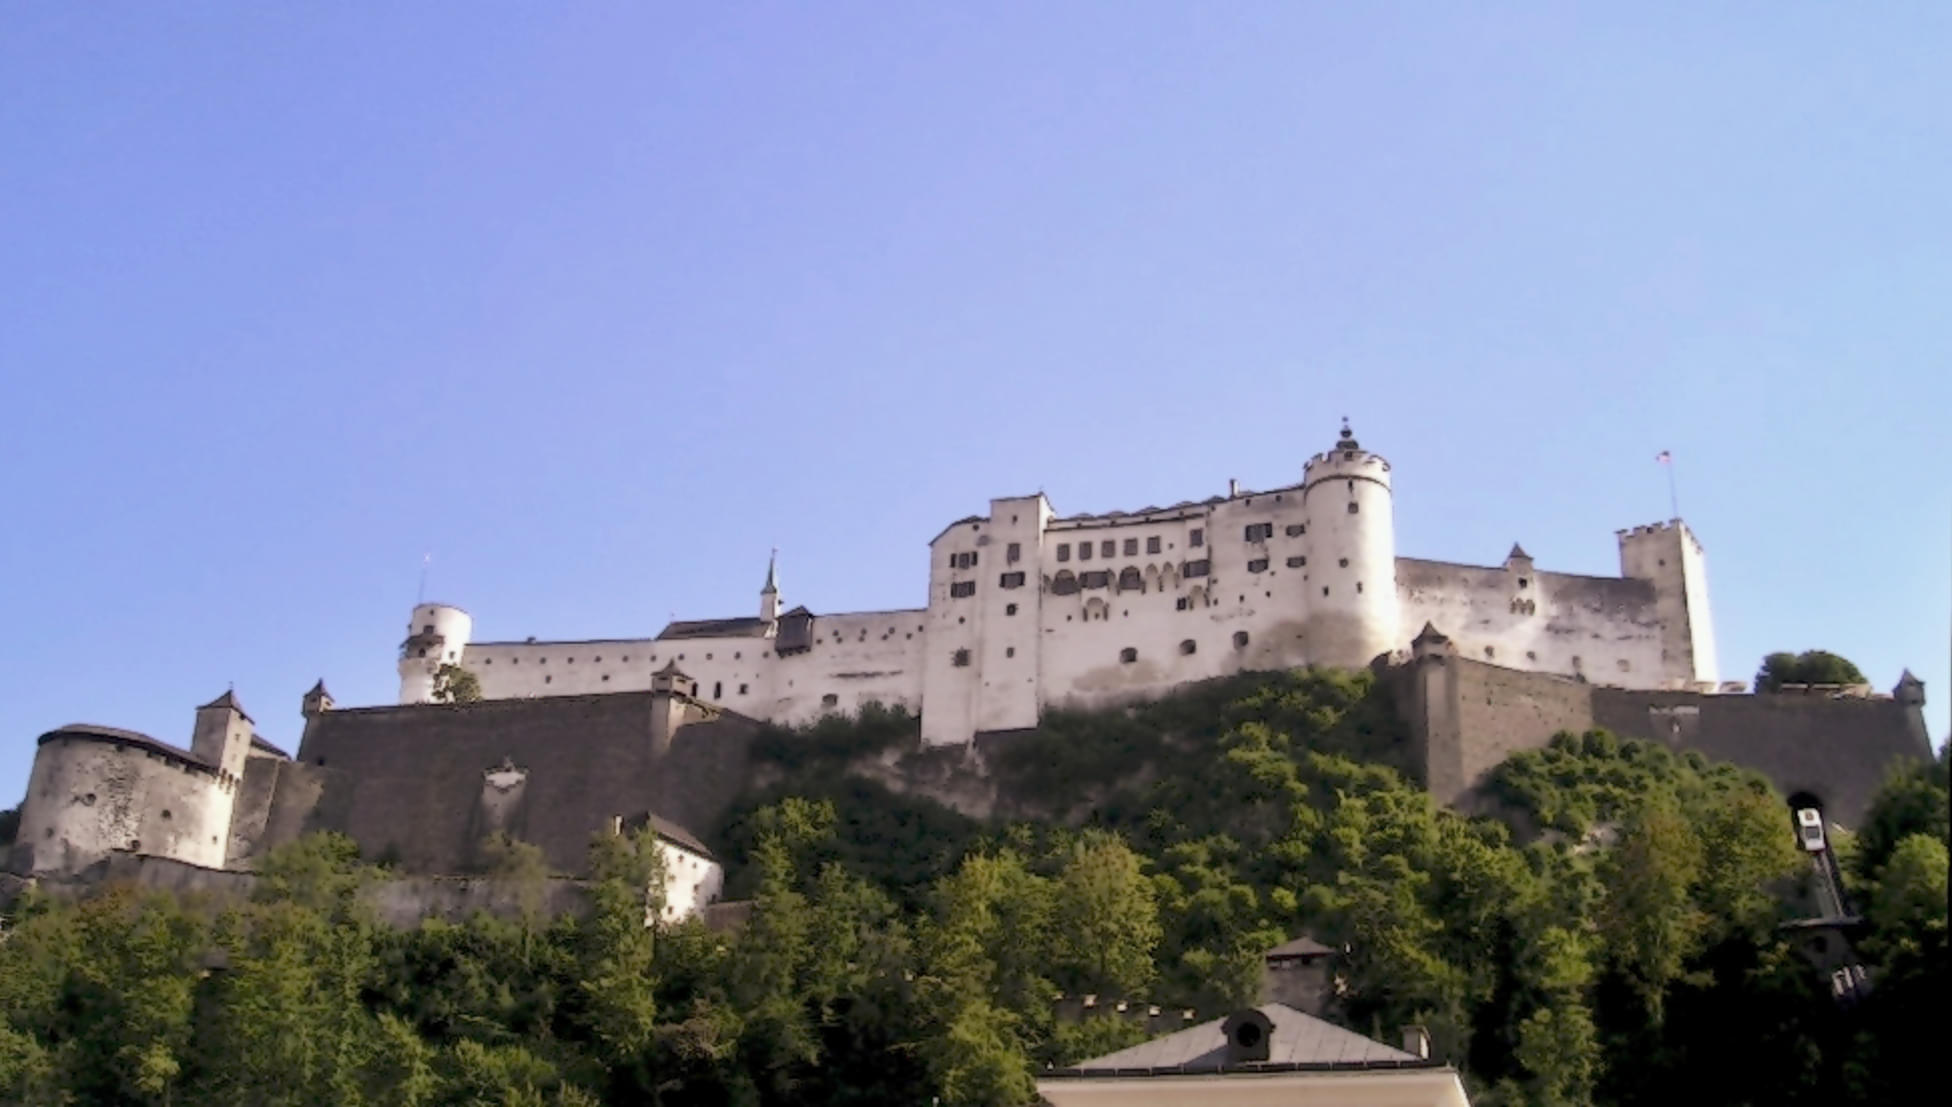 Hohensalzburg Fortress Overview